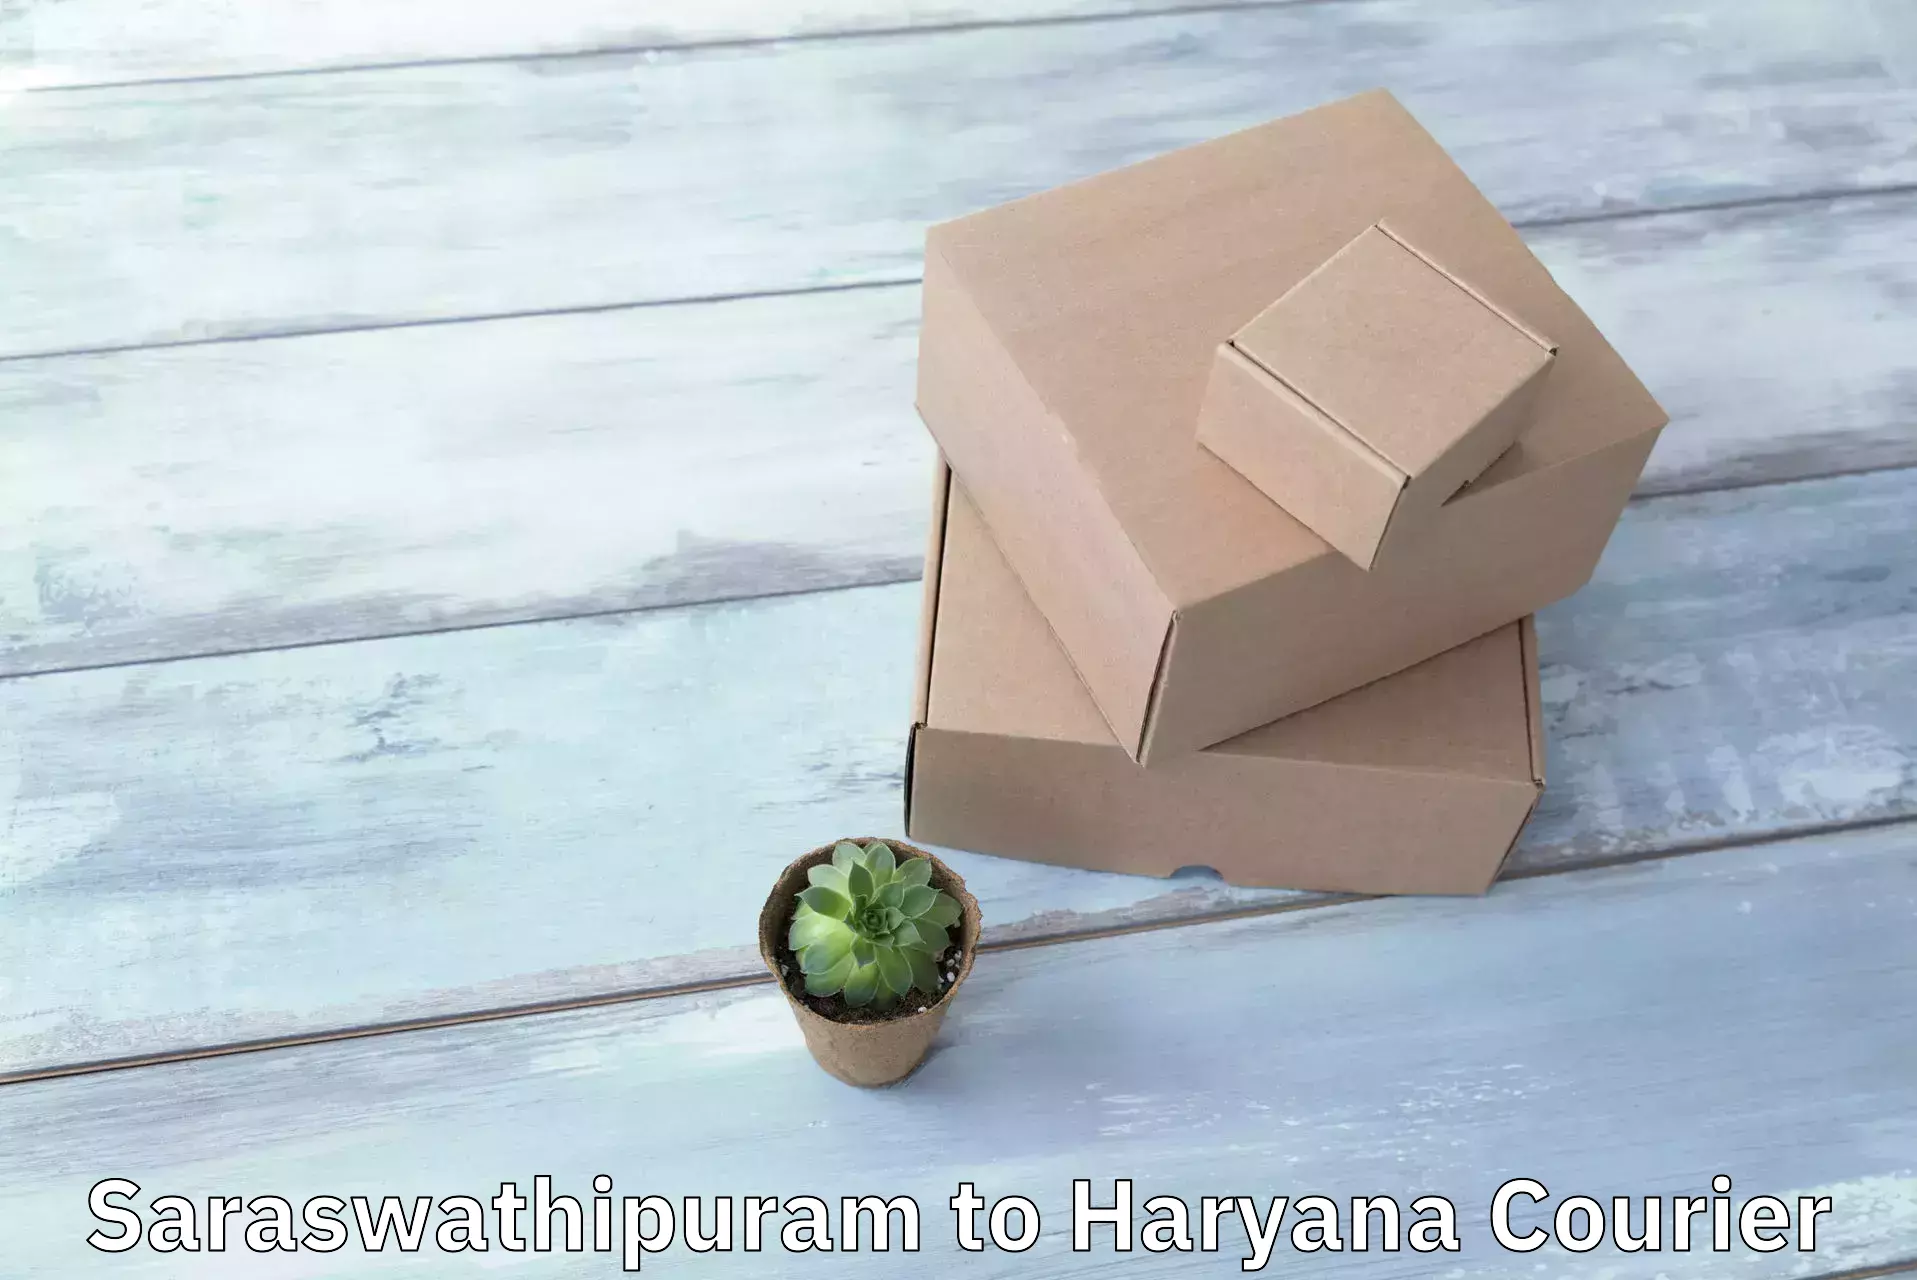 Advanced courier platforms Saraswathipuram to NCR Haryana